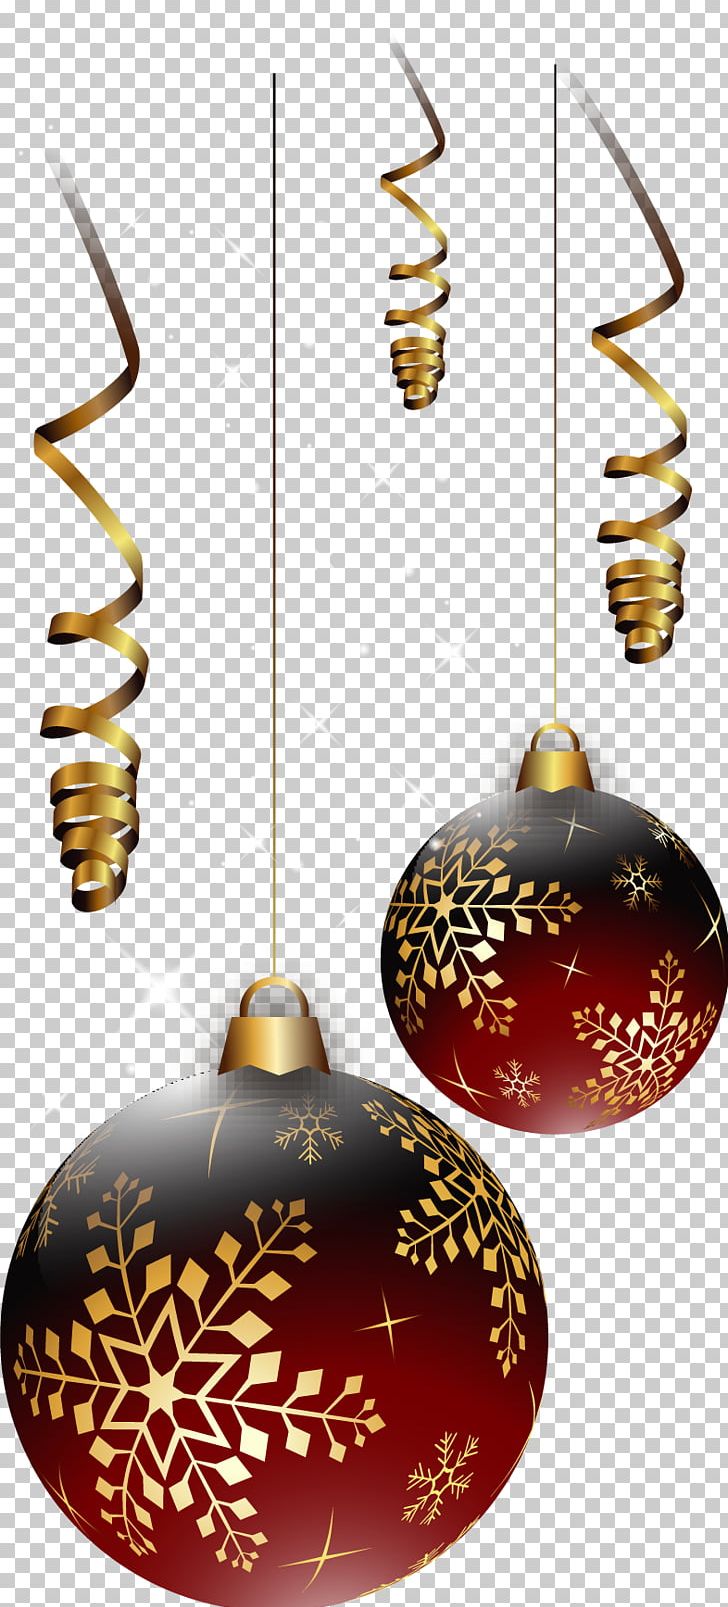 Christmas Ornament Christmas Decoration Tinsel PNG, Clipart, Ball, Christmas, Christmas Decoration, Christmas Ornament, Christmas Tree Free PNG Download